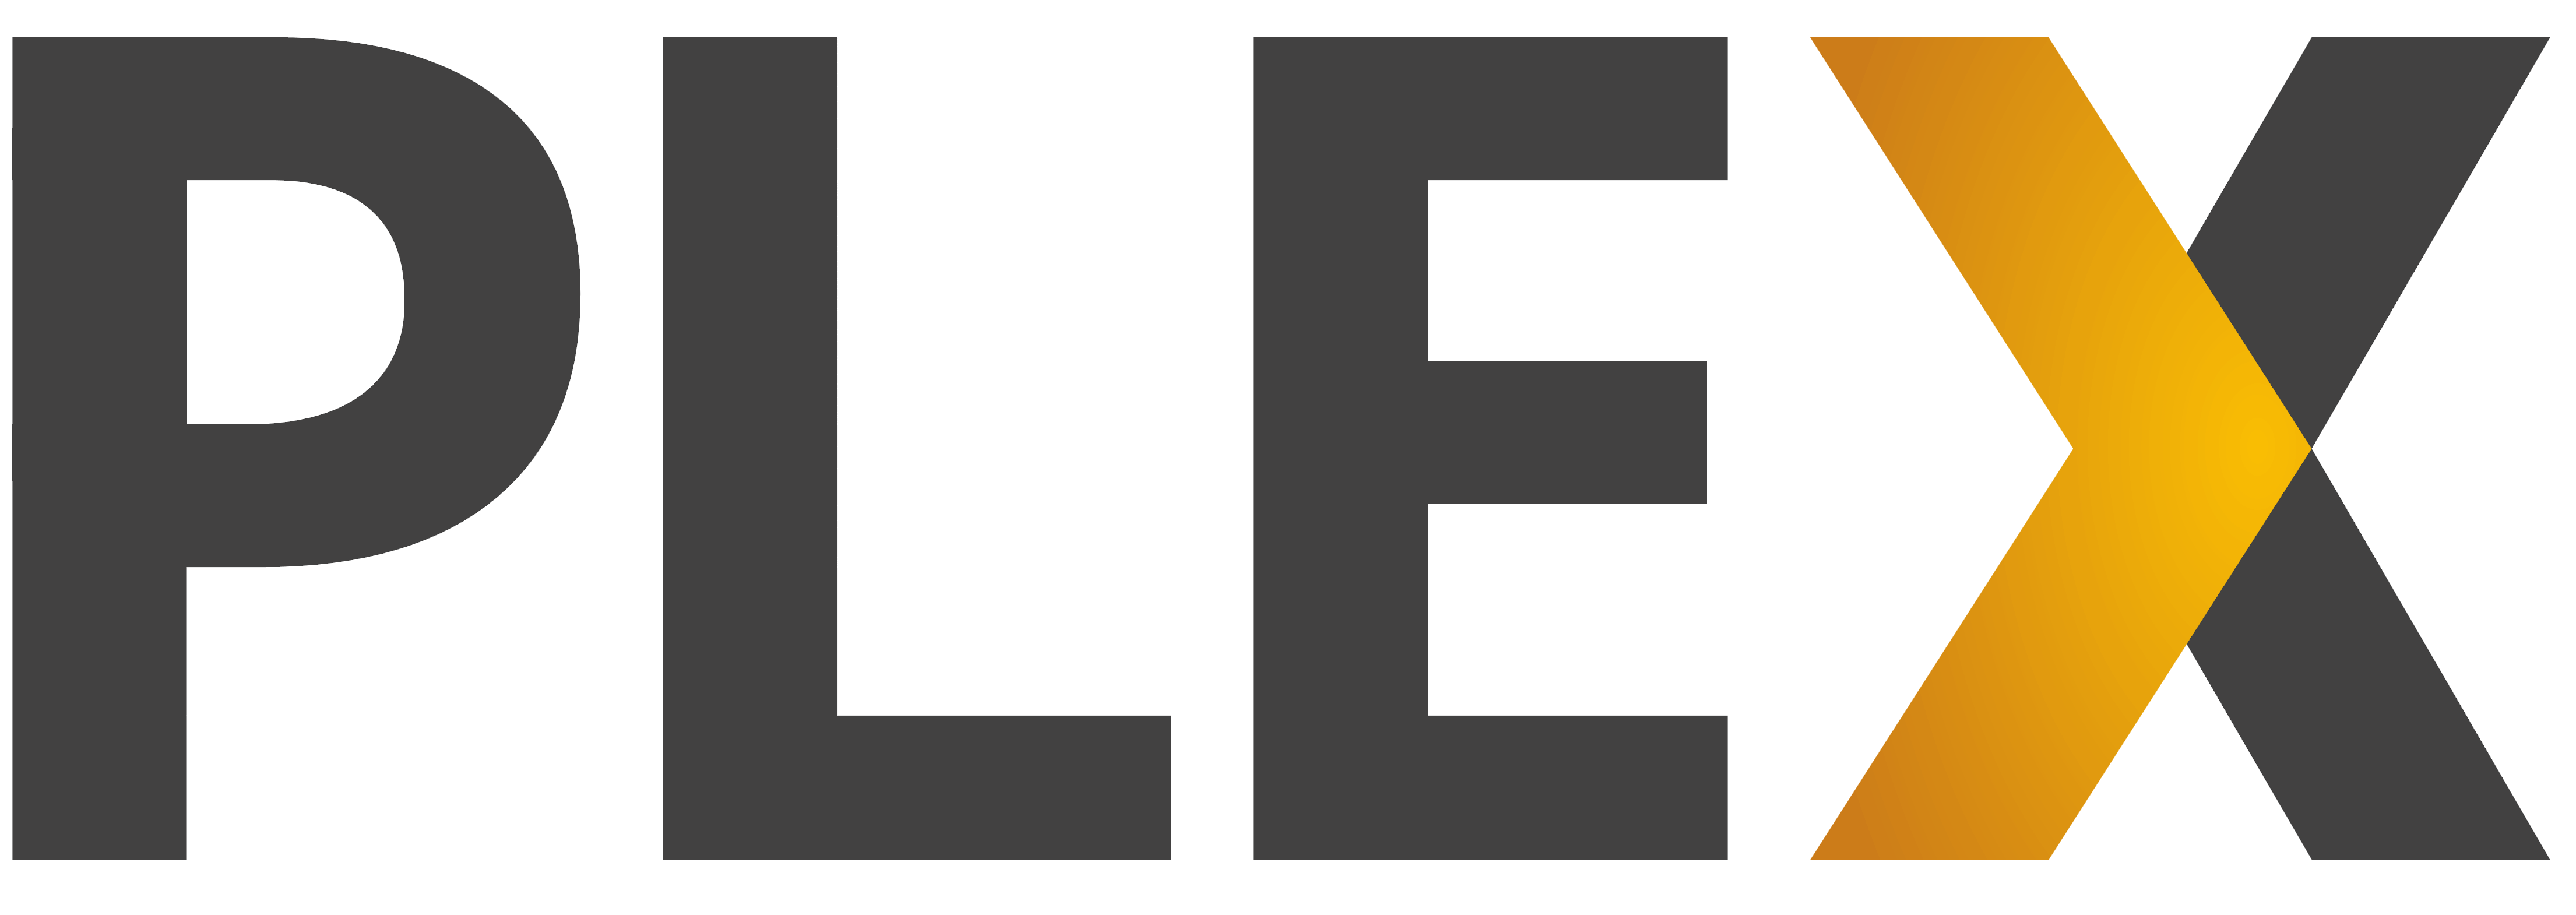 Plex logo, logotype